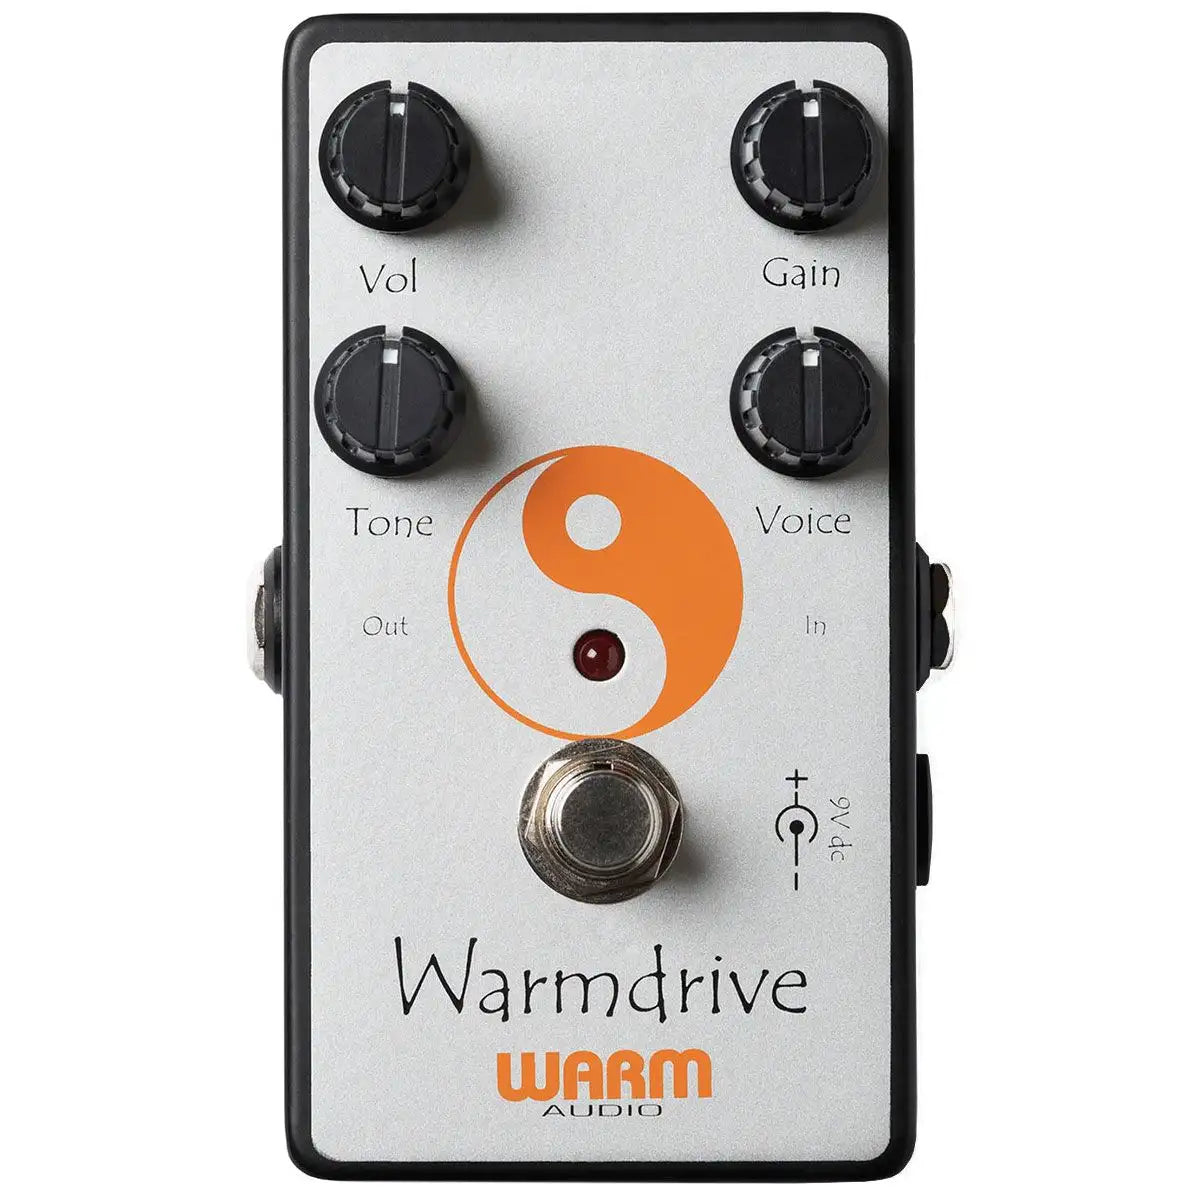 Warm Audio Wa-Wd Warmdrive Amp-In-Box Overdrive Pedal